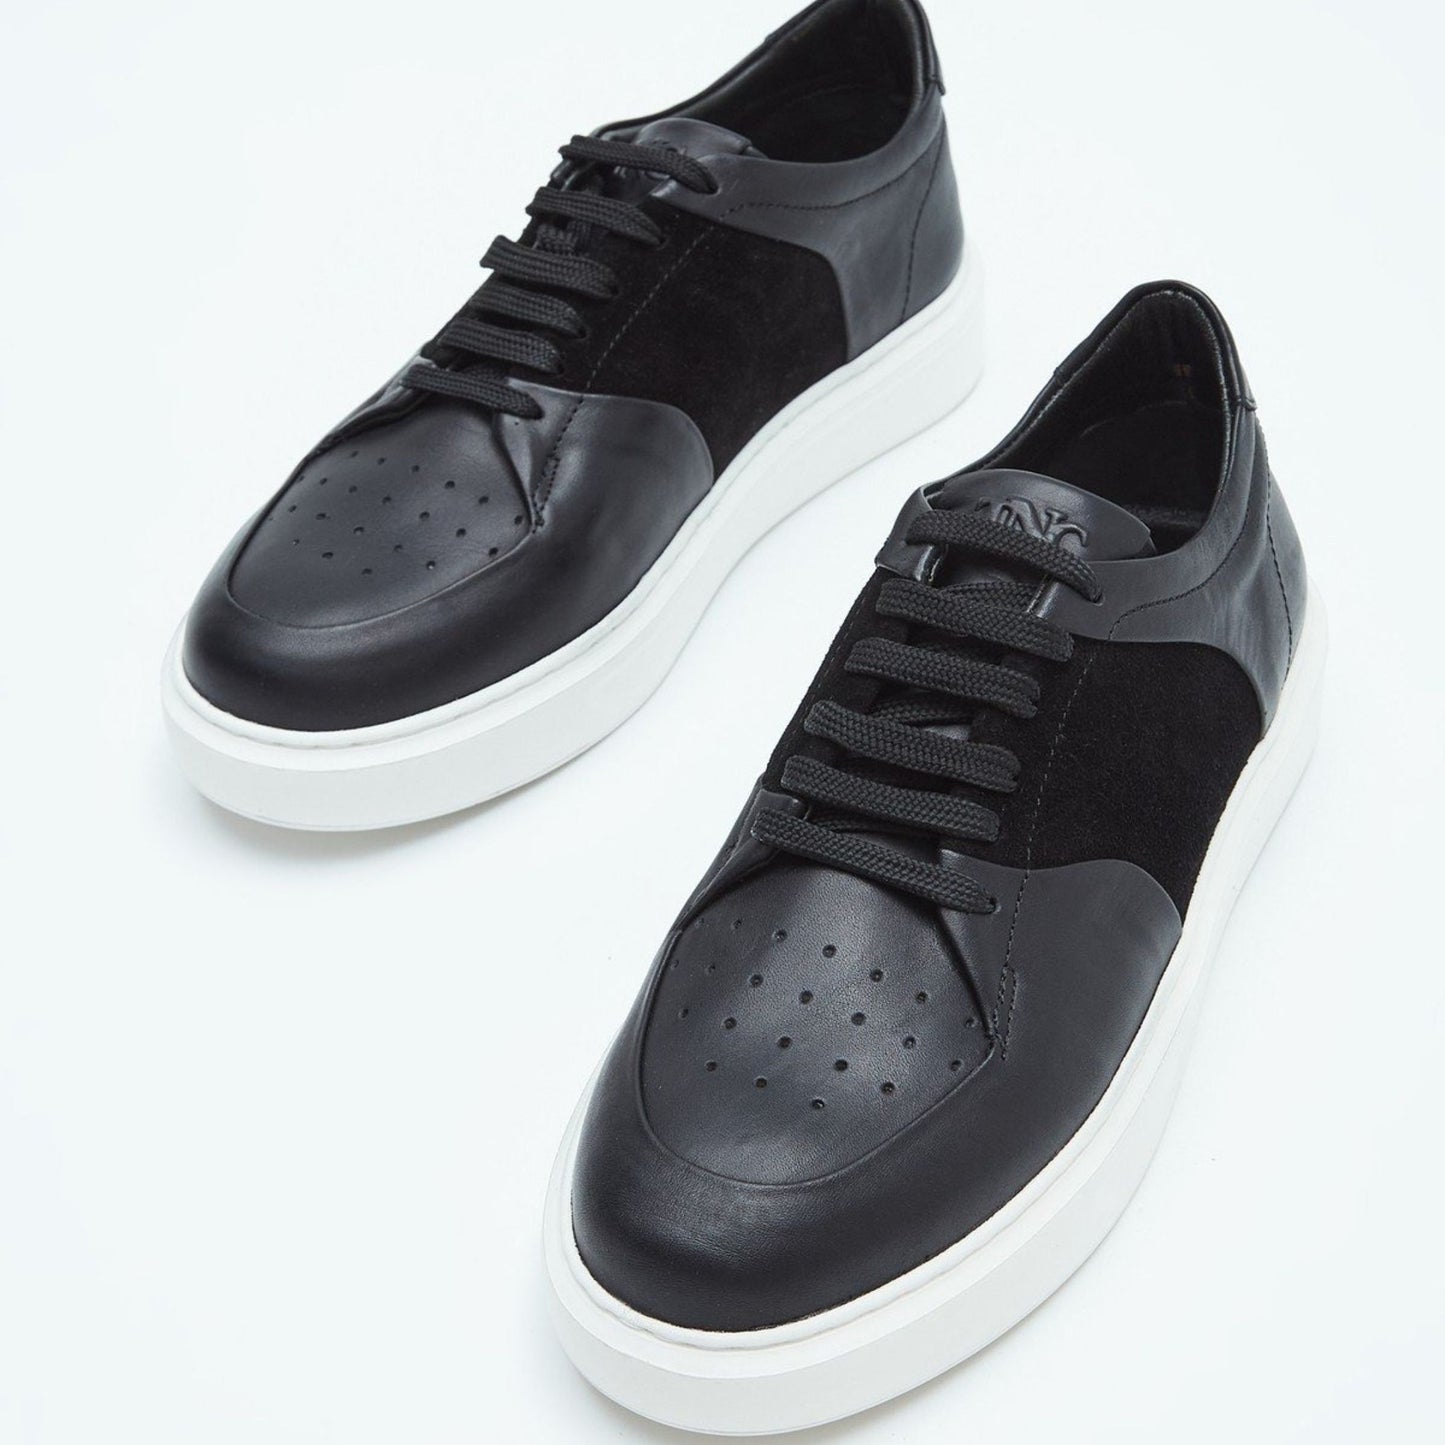 Madasat Black Genuine Leather Sneakers - 857 |